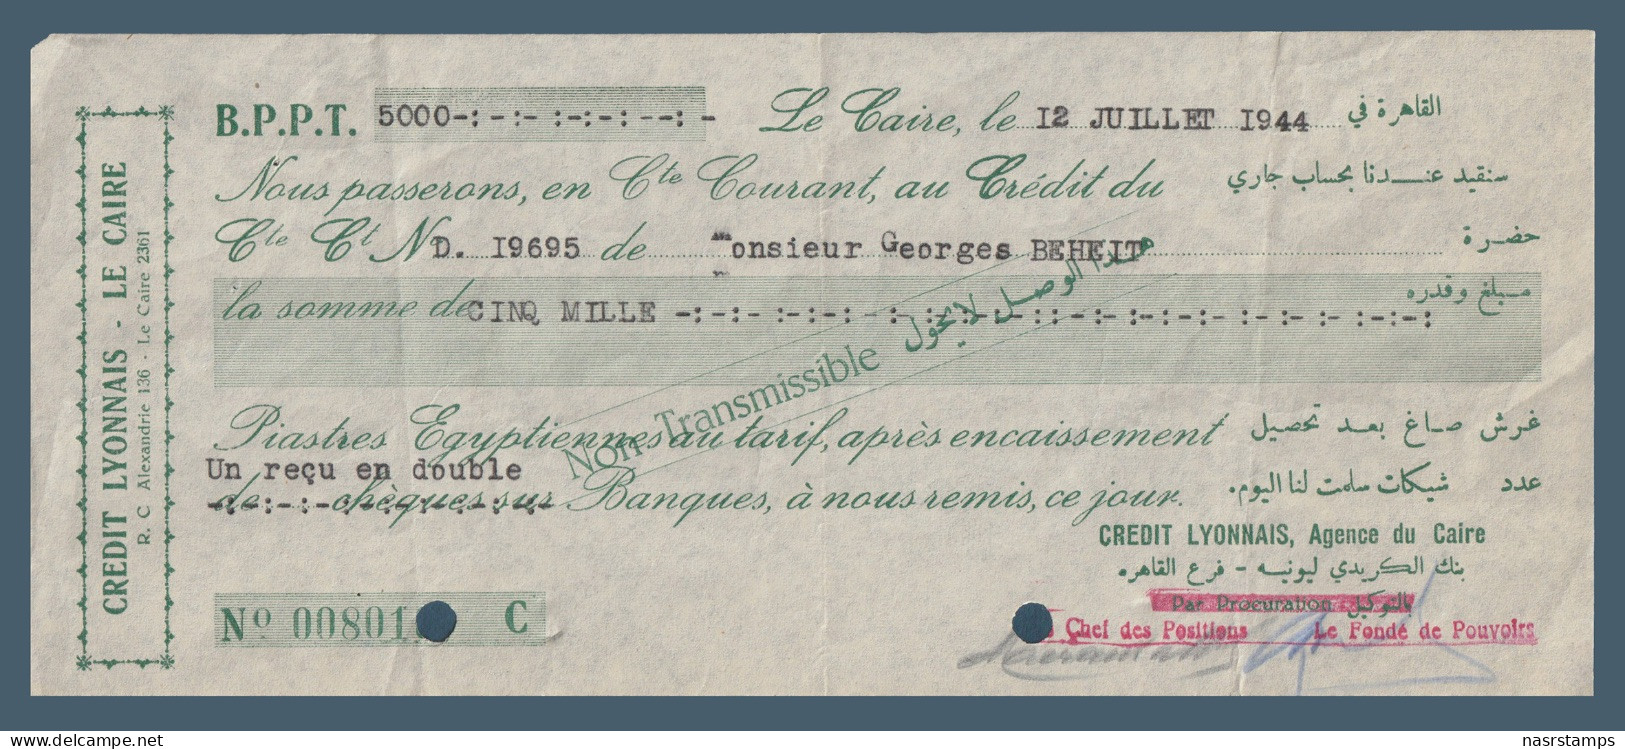 Egypt - 1944 - Vintage Check - ( Credit Lyonnais Bank - Cairo ) - Cheques En Traveller's Cheques